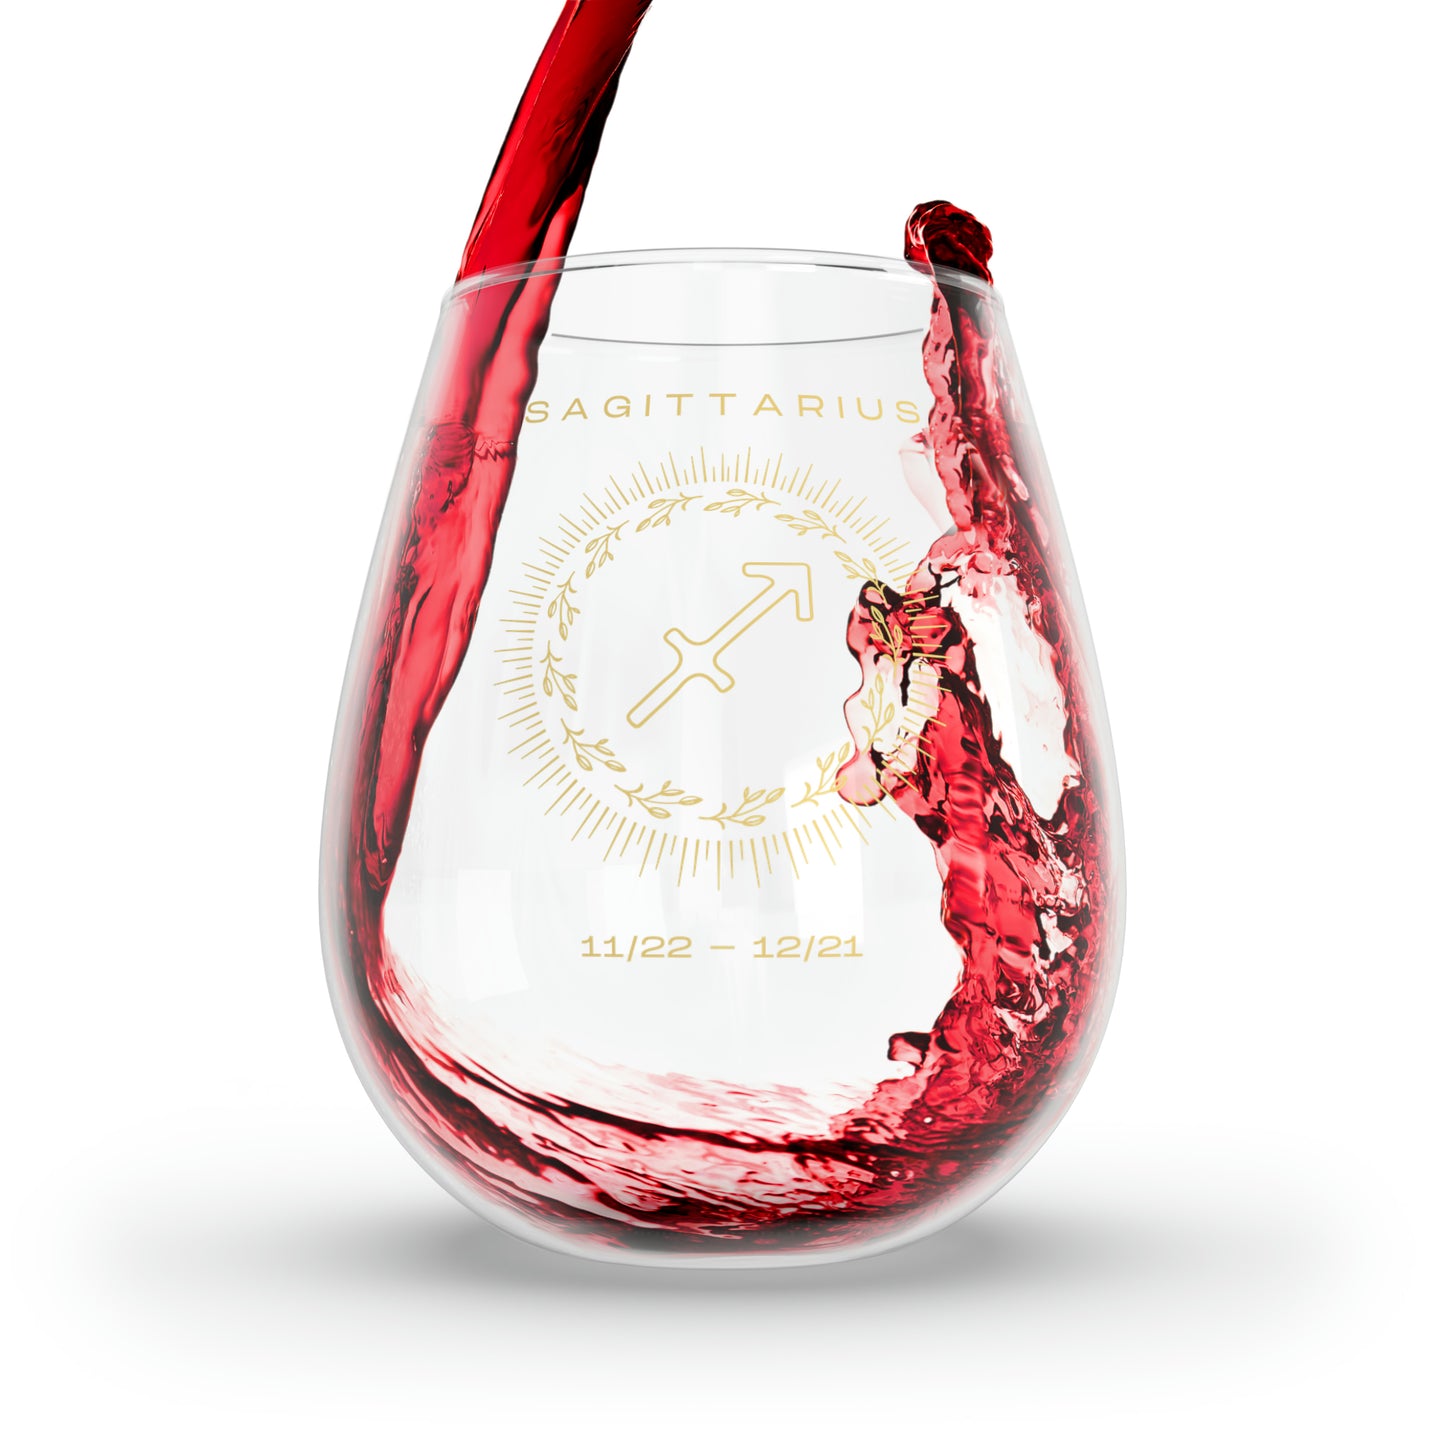 Sagittarius Stemless Wine Glass 11.75oz